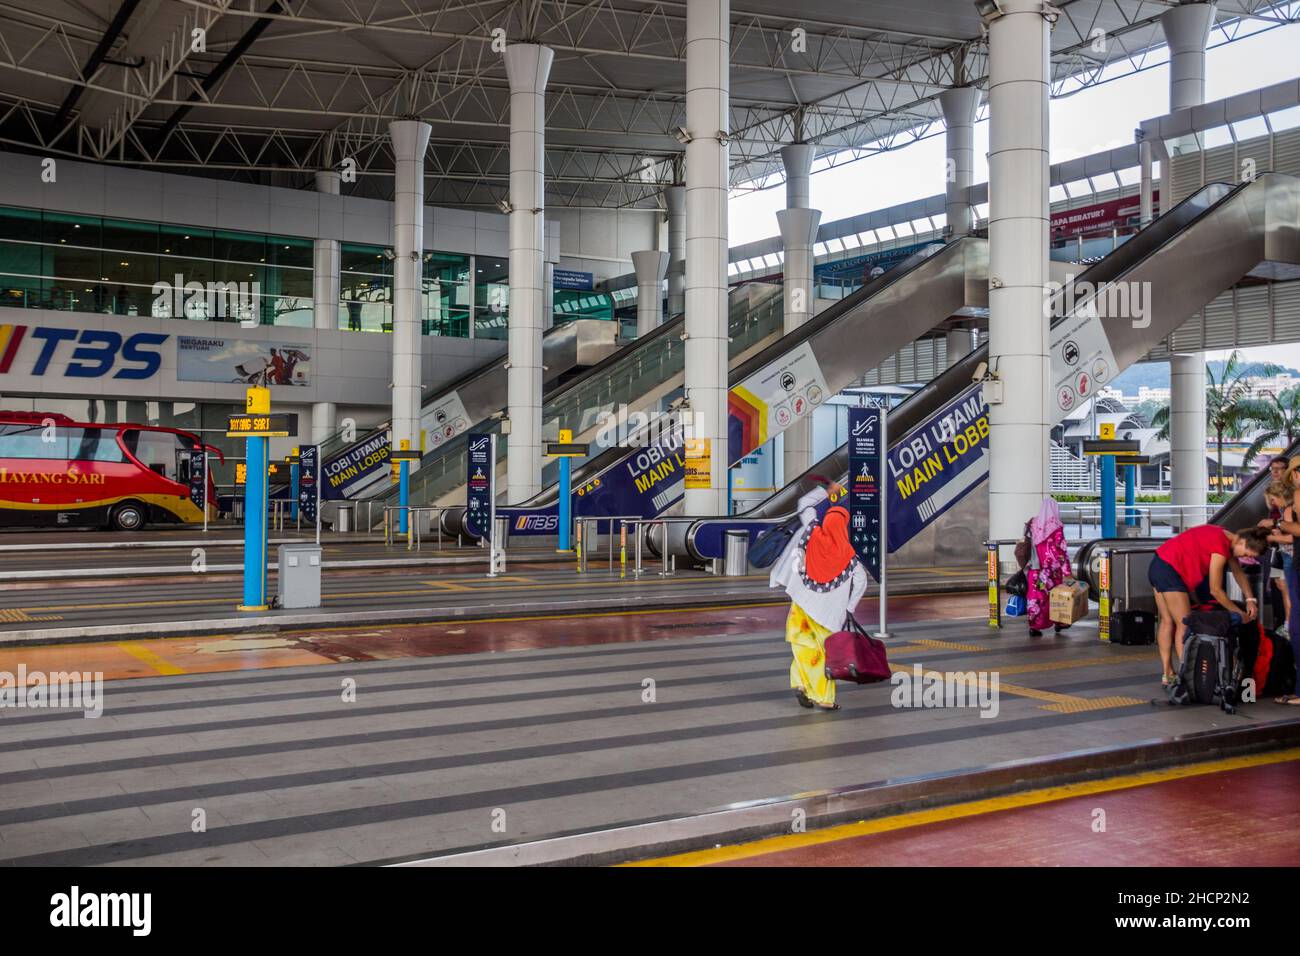 KUALA LUMPUR, MALAYSIA - MARCH 22, 2018: Platforms of Terminal Bersepadu Selatan bus station in Kuala Lumpur, Malaysia. Stock Photo